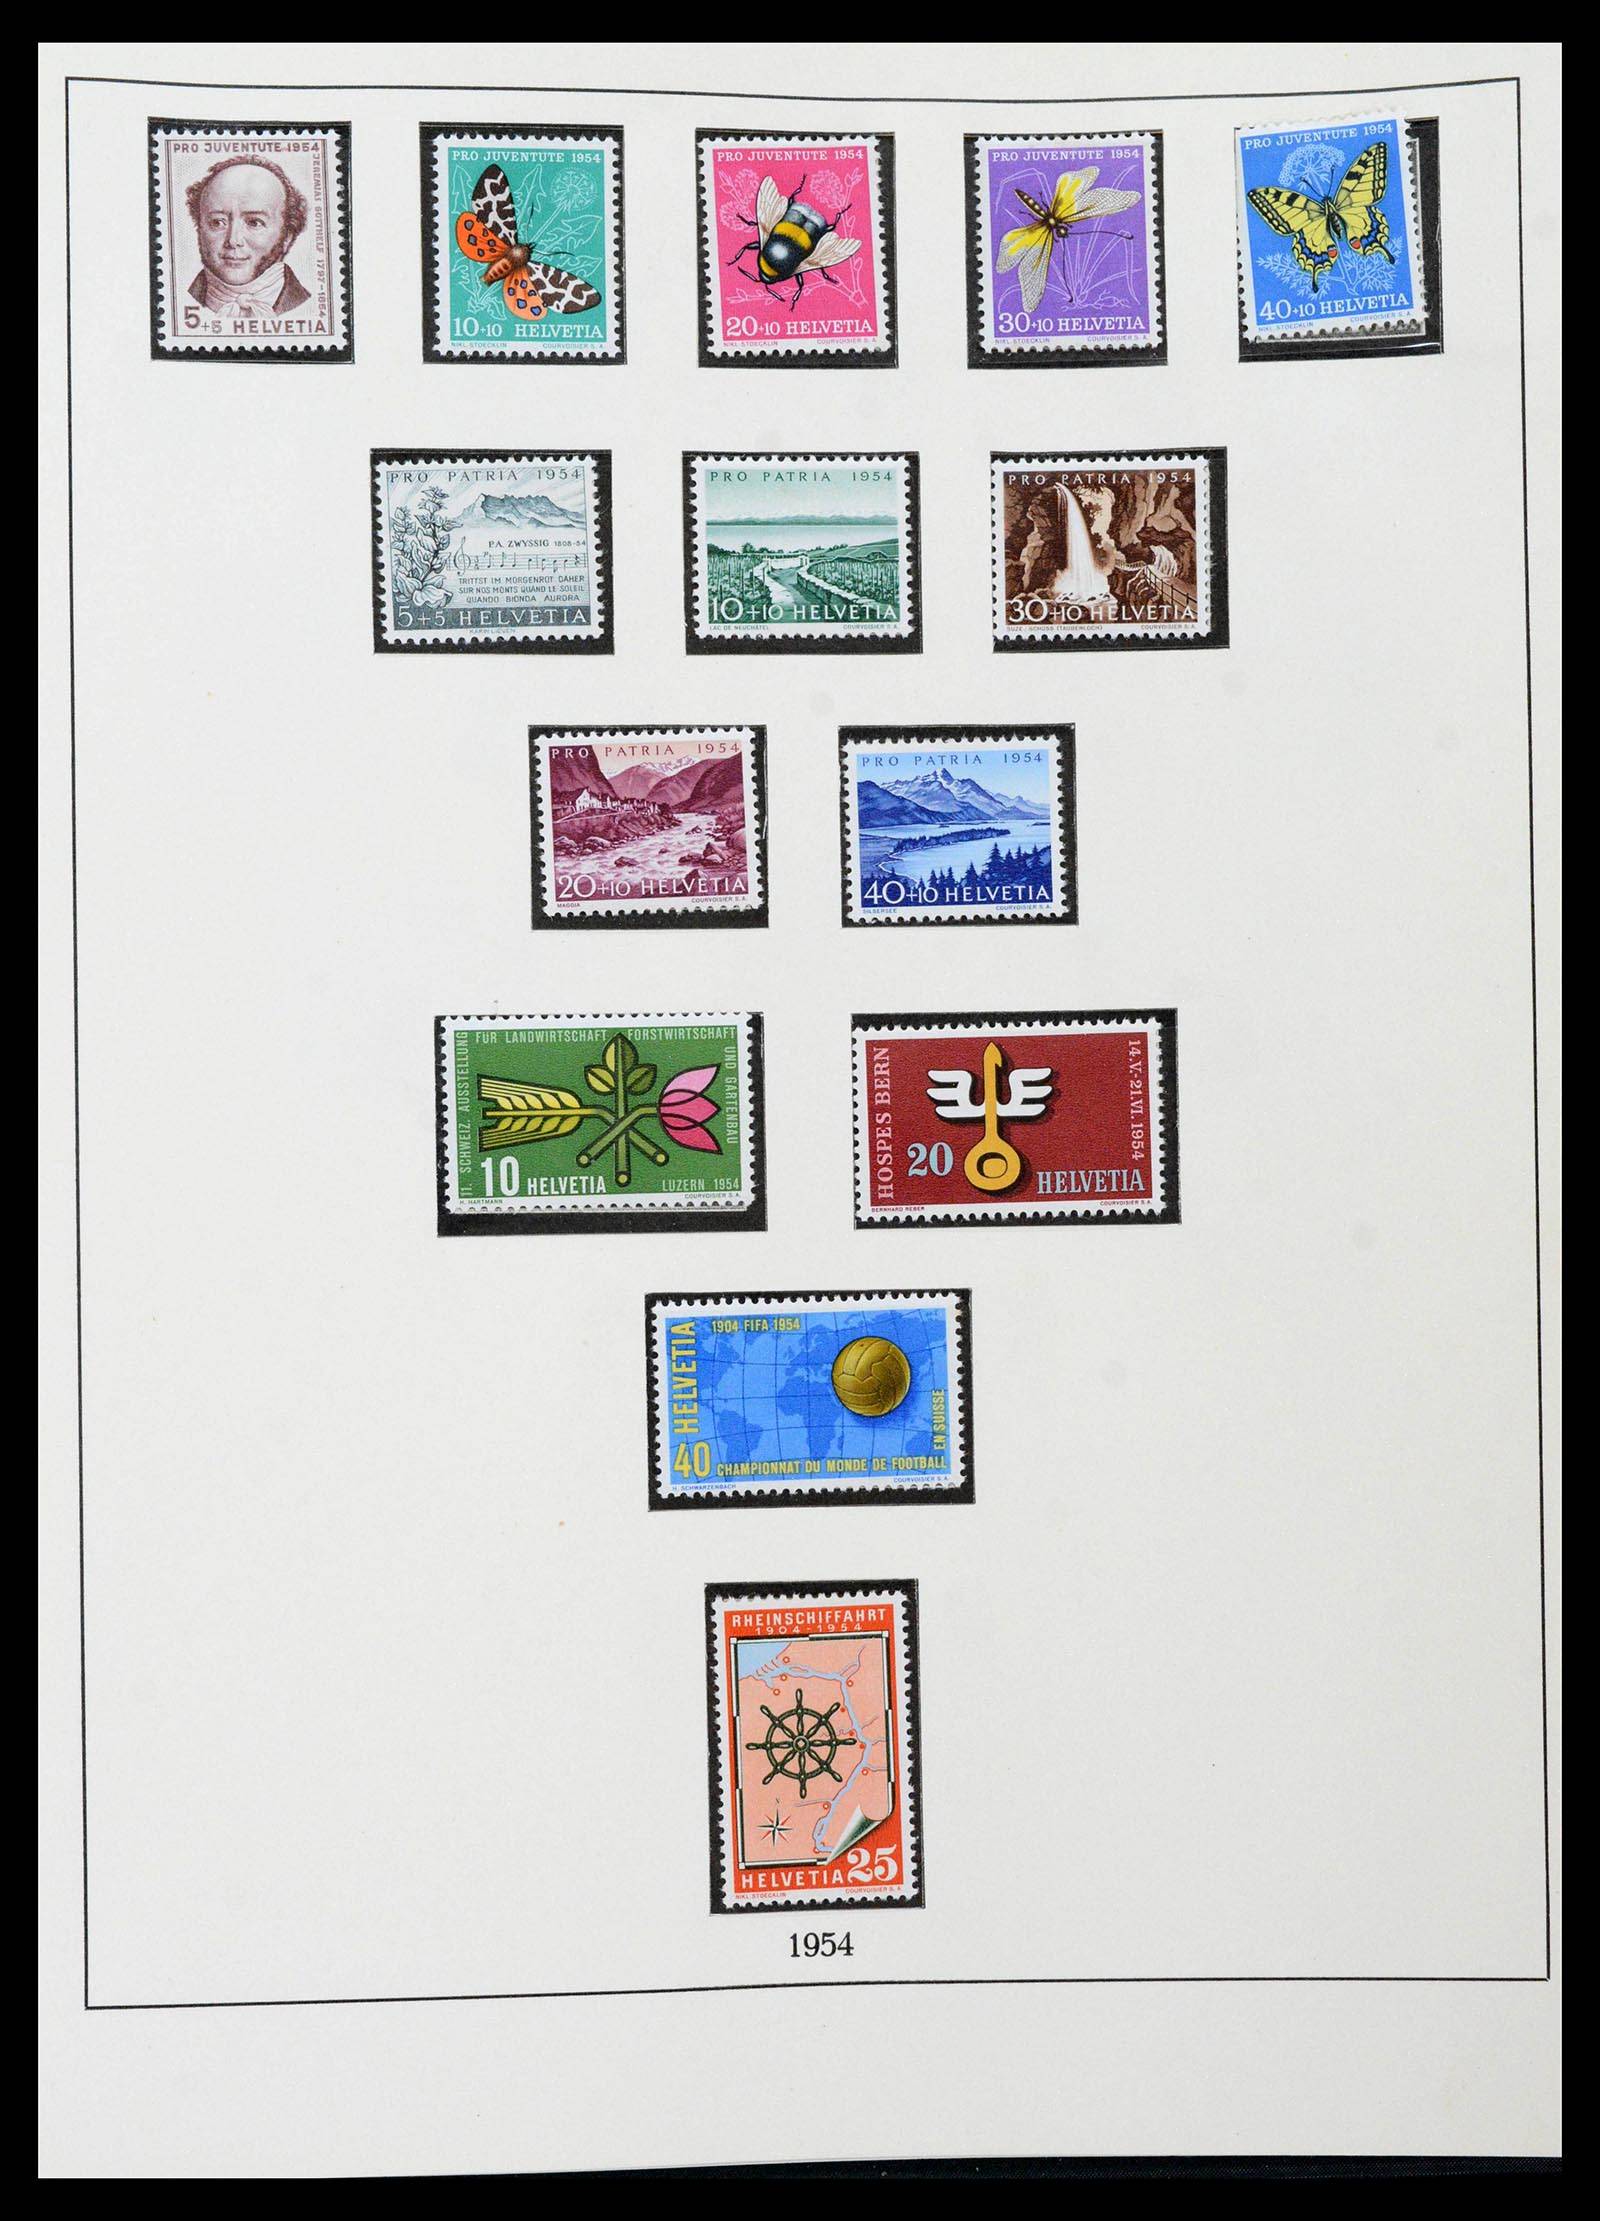 39235 0052 - Stamp collection 39235 Switzerland 1843-1960.